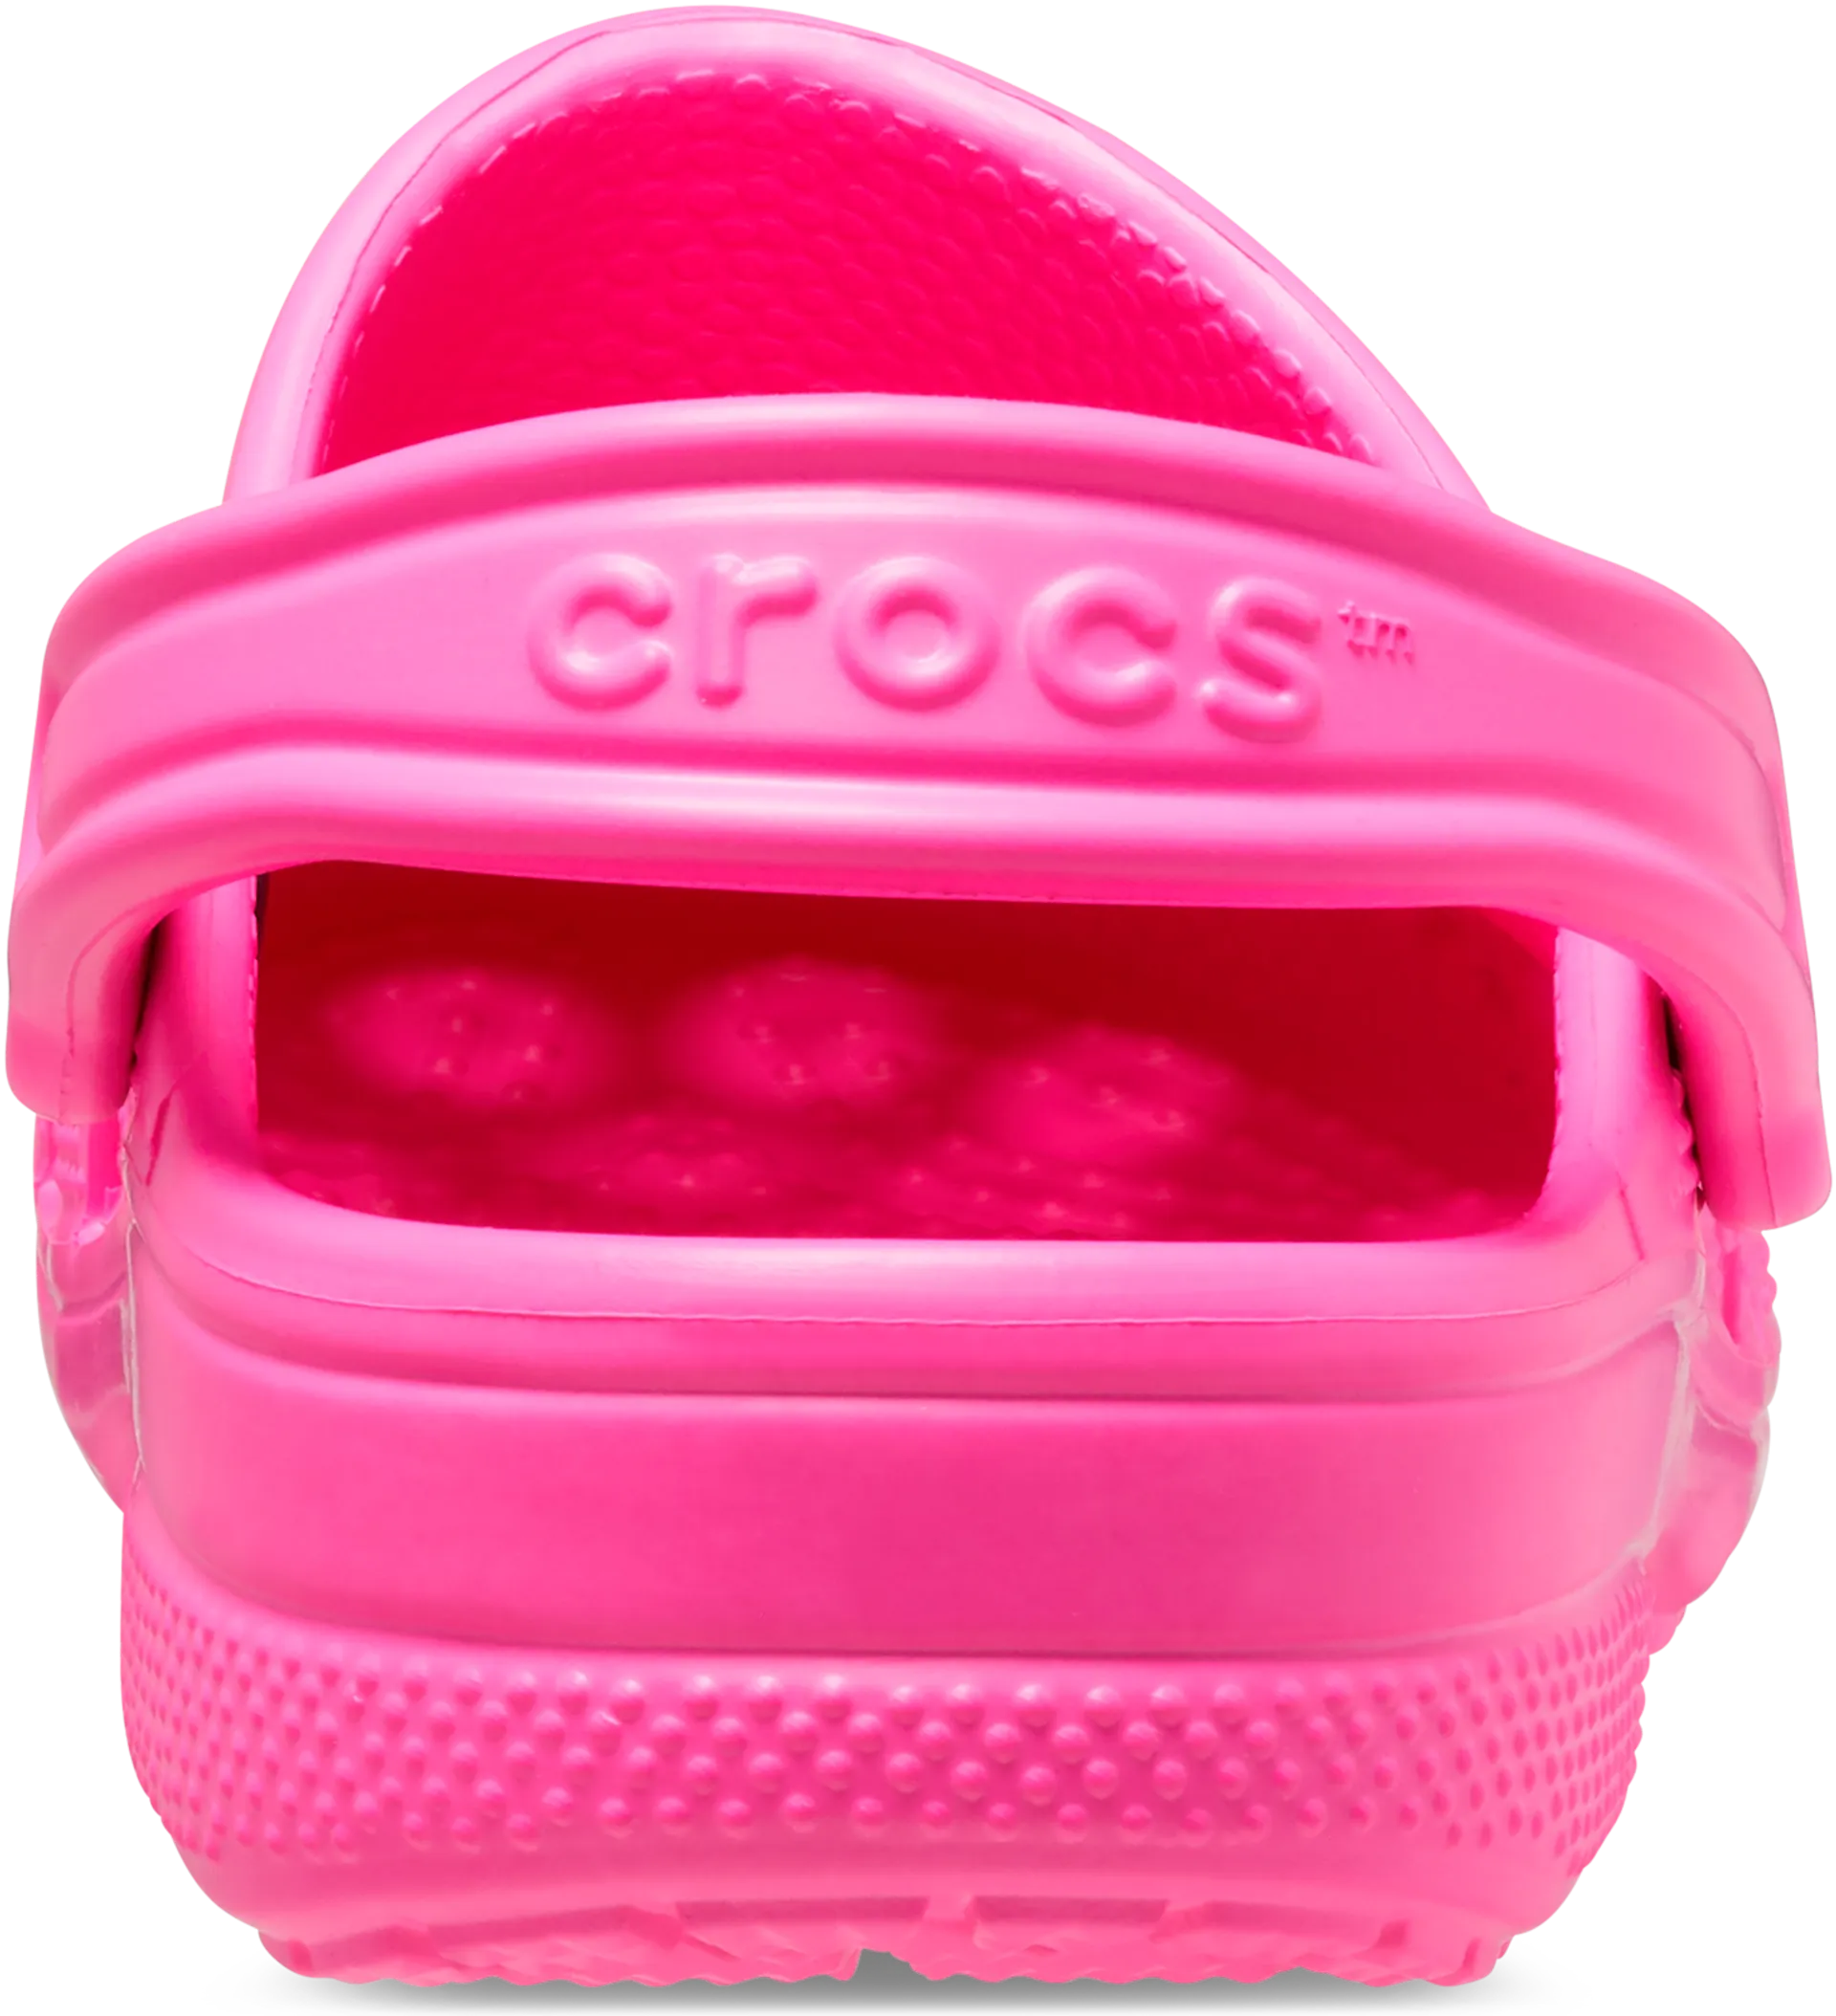 Crocs Baya naisten pistokas - Electric pink - 7